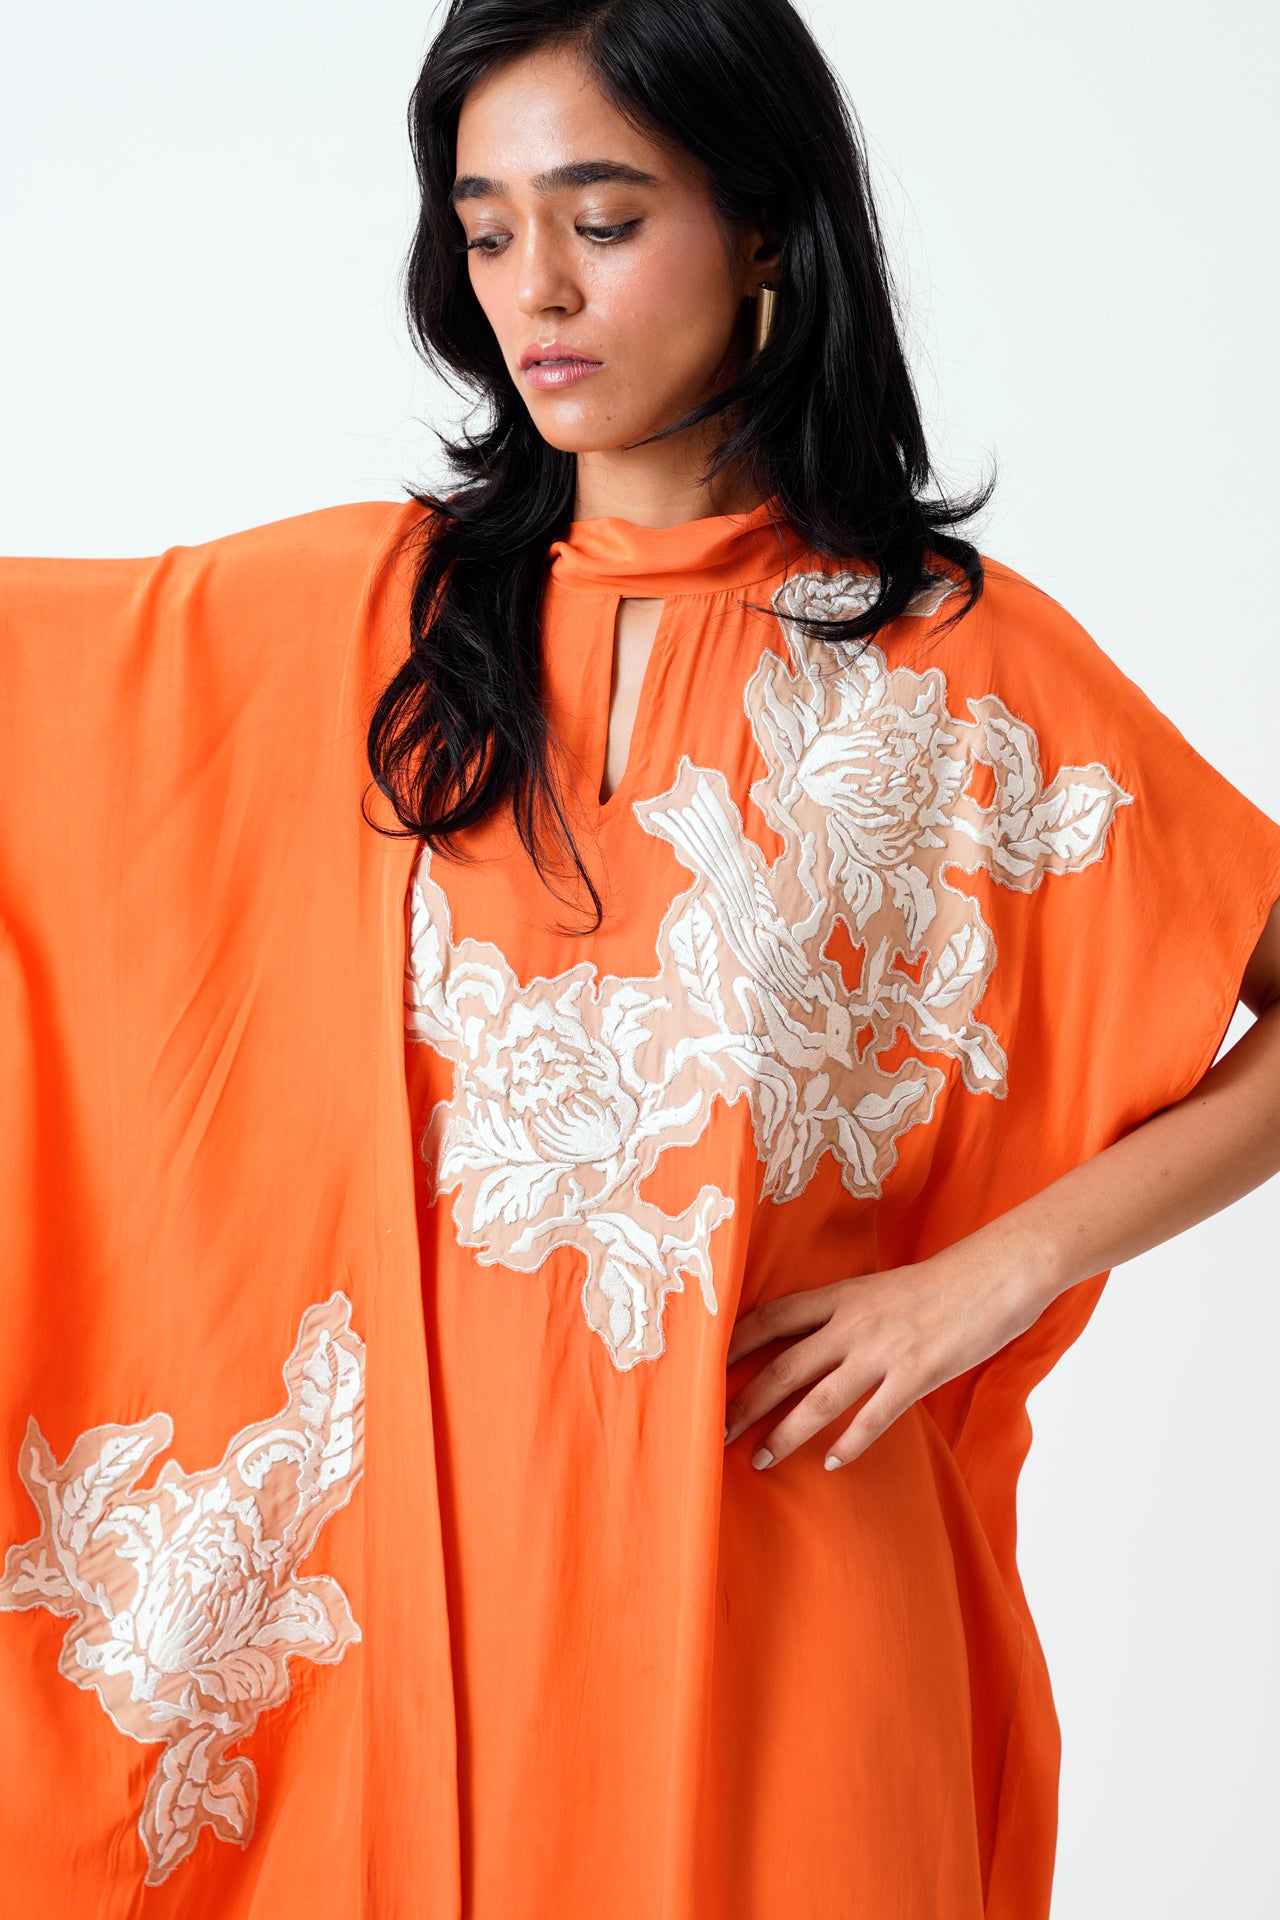 Sunset Orange Nante - Scarf Kaftan Dress